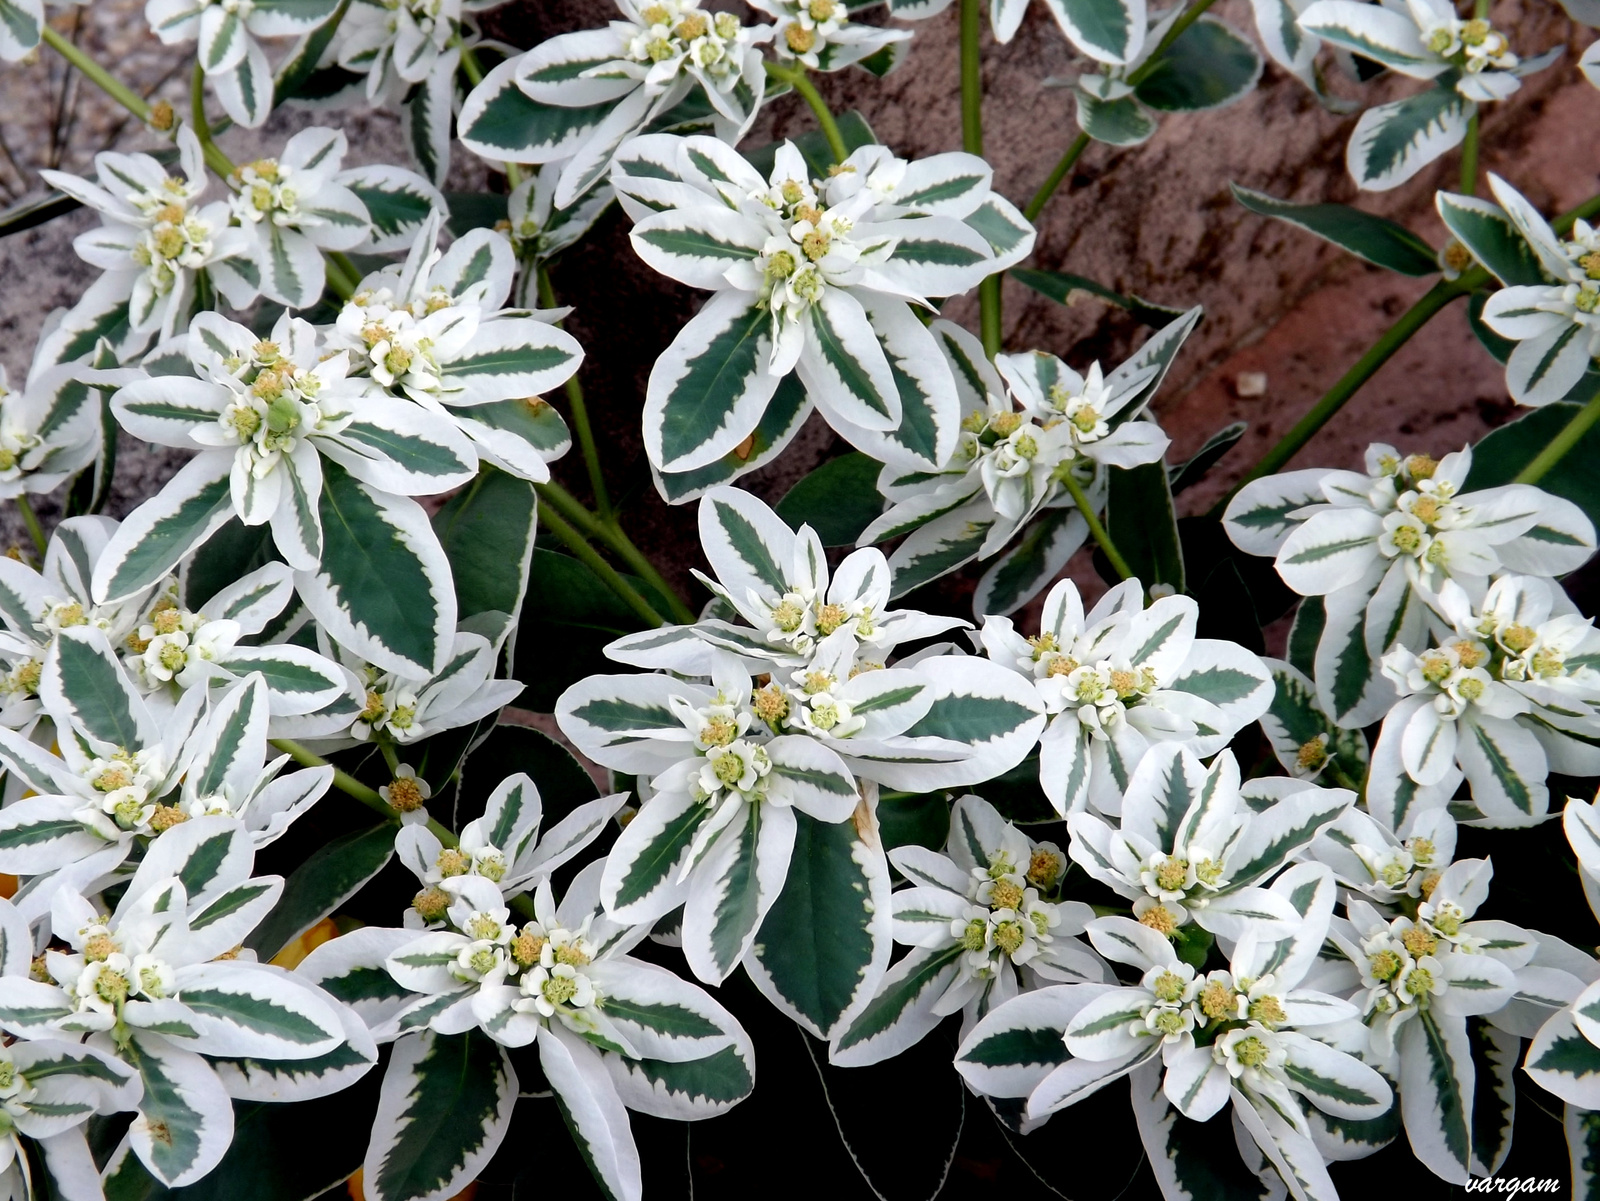 jégvirág (Euphorbia)